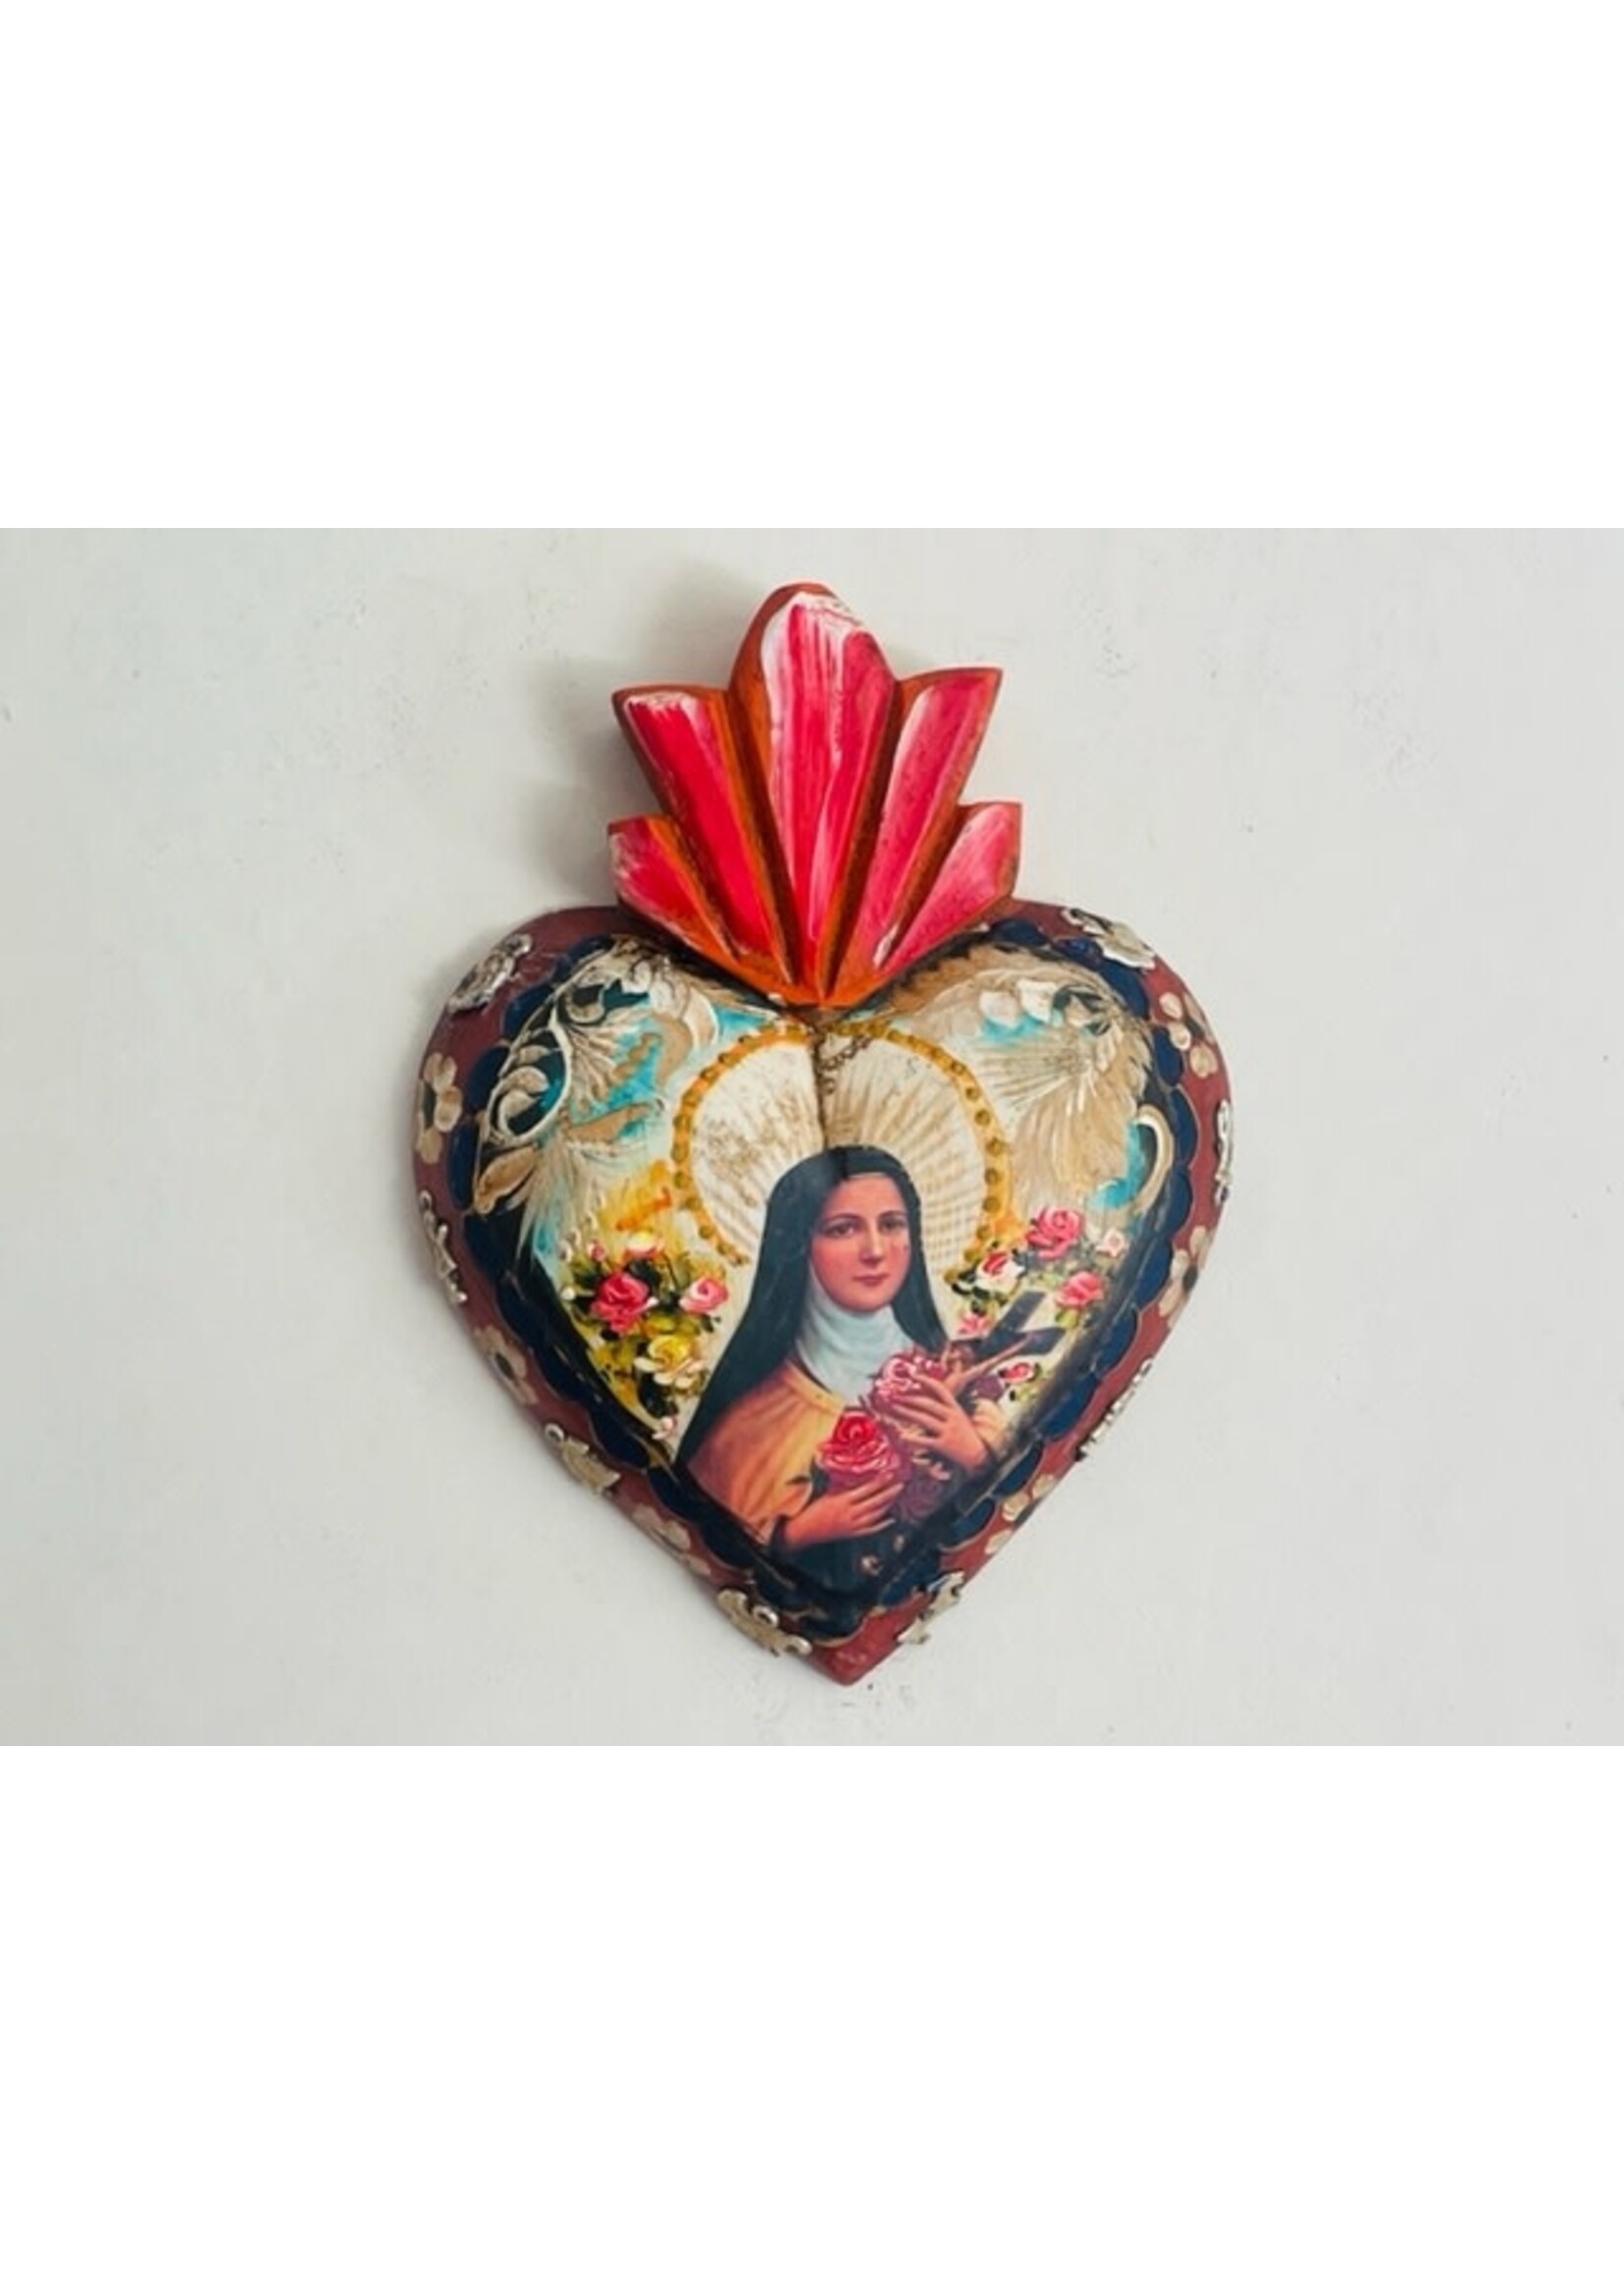 Saint Therese handmade wood heart